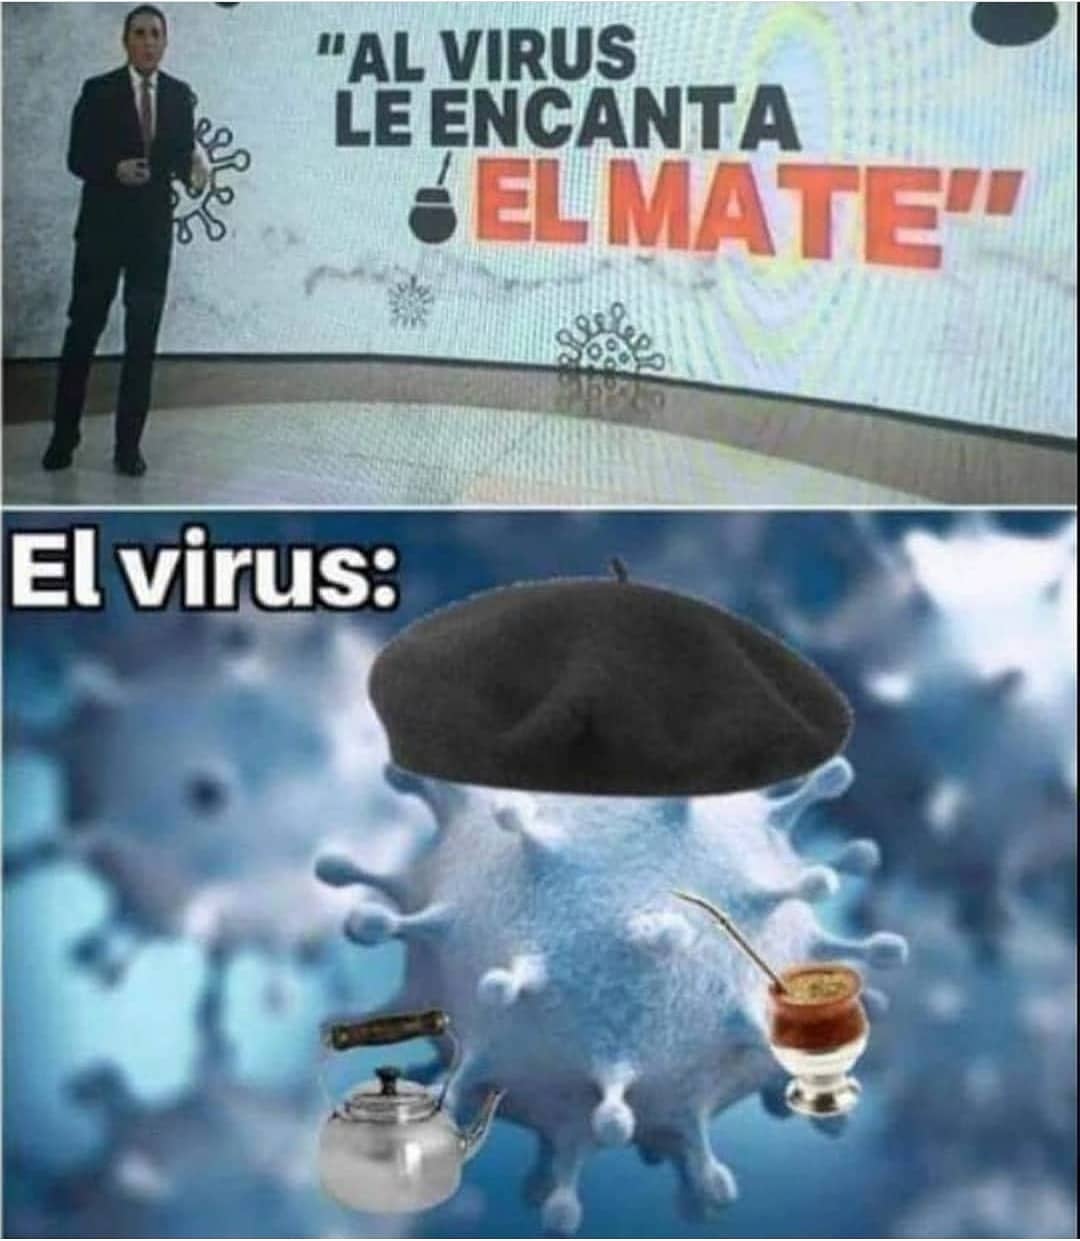 Al virus le encanta d el mate.  El virus: